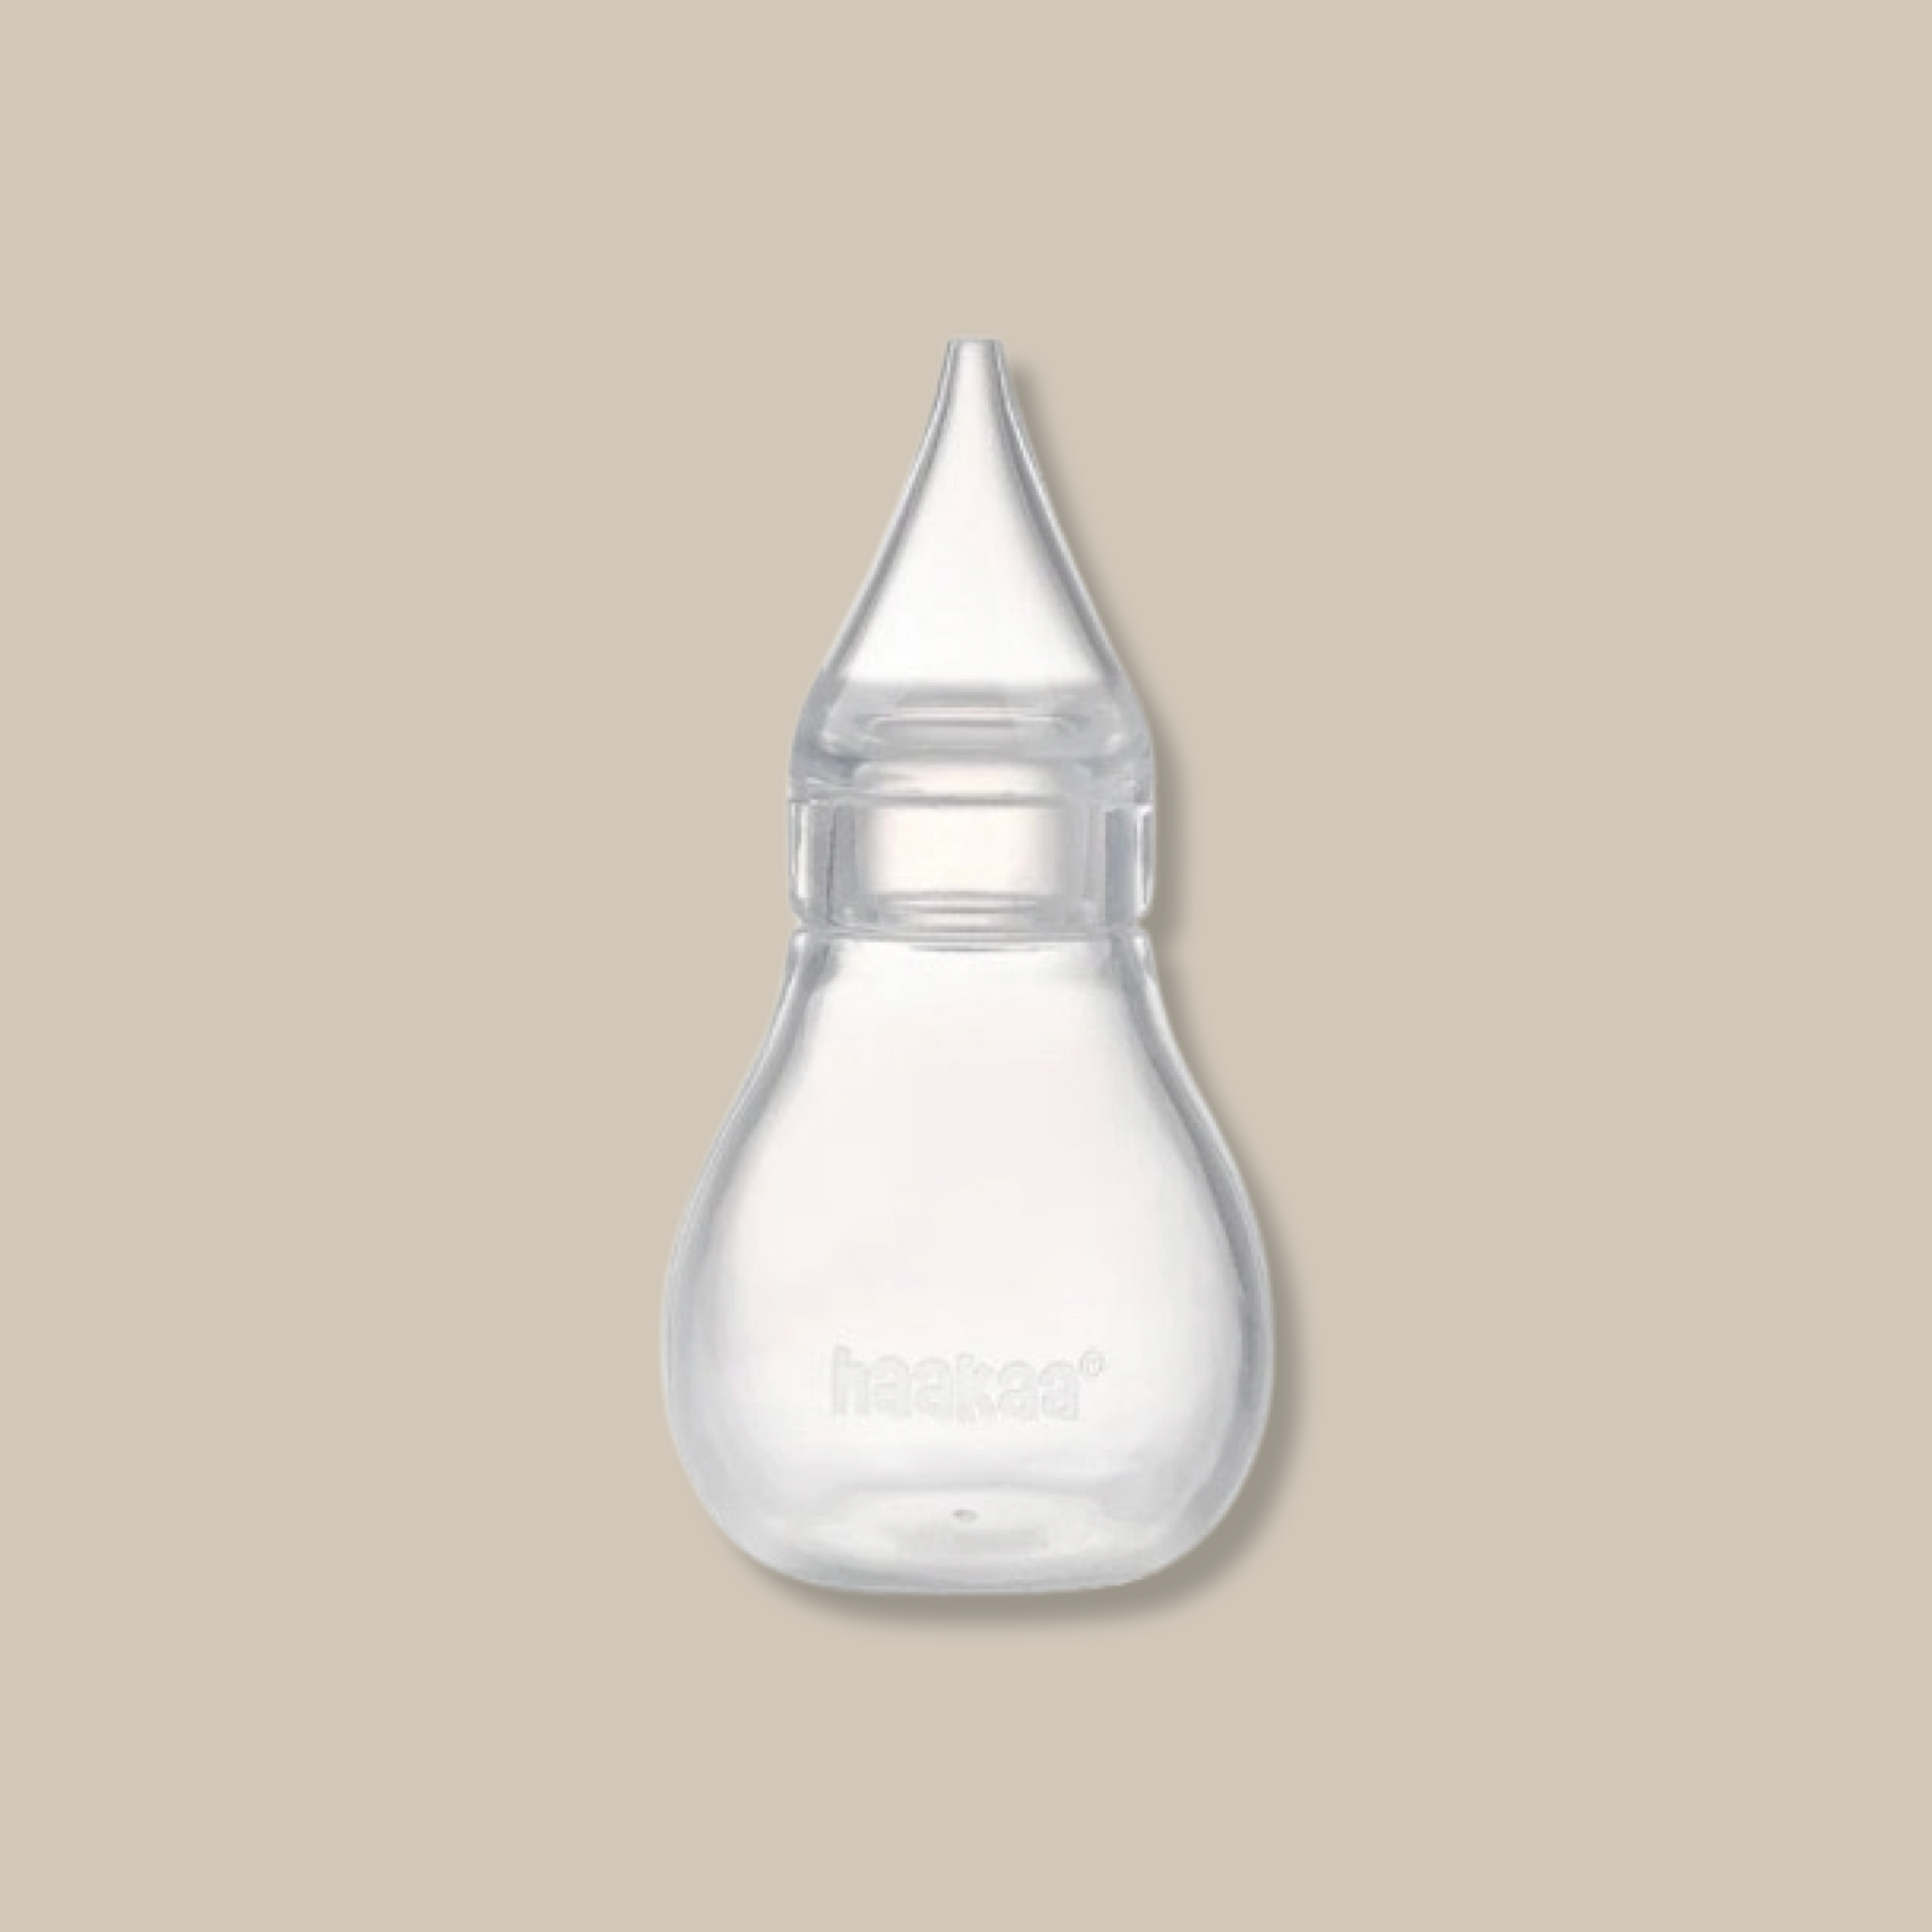 Easy Squeeze Silicone Bulb Syringe Haakaa